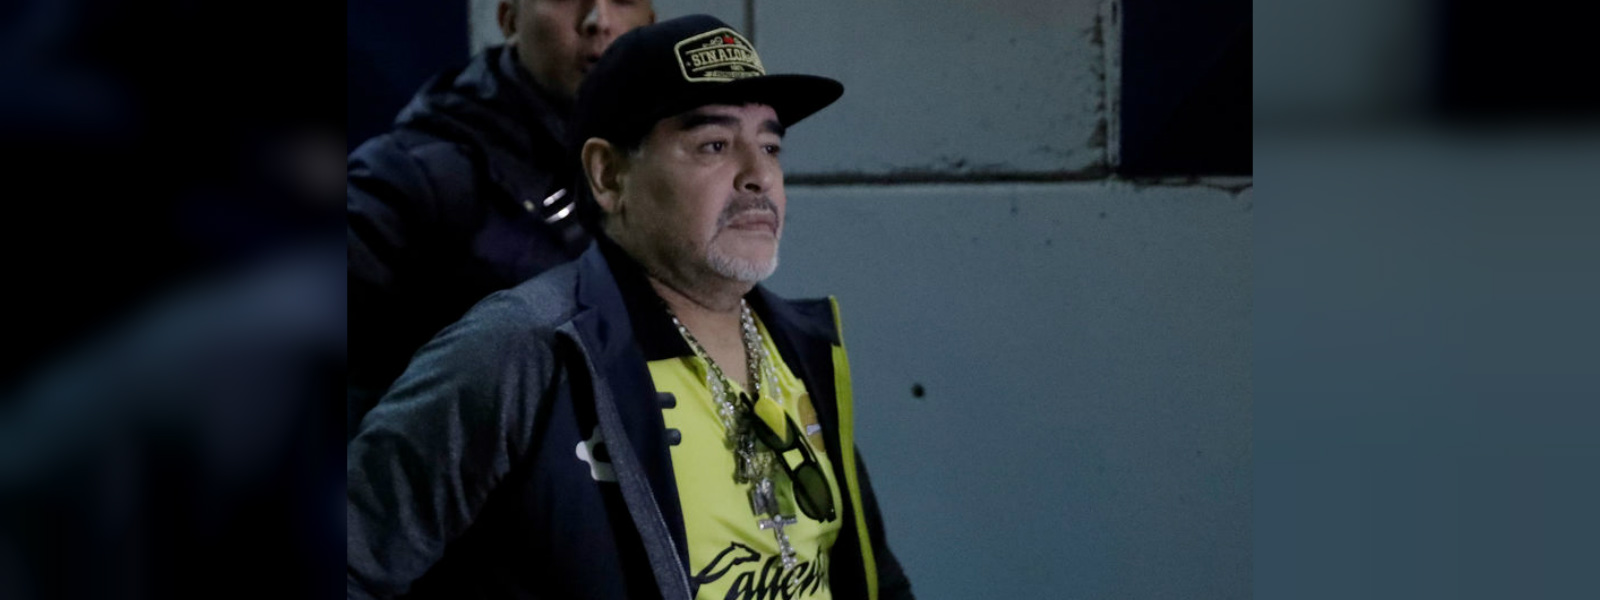 Maradona admitted to hospital for surgery 